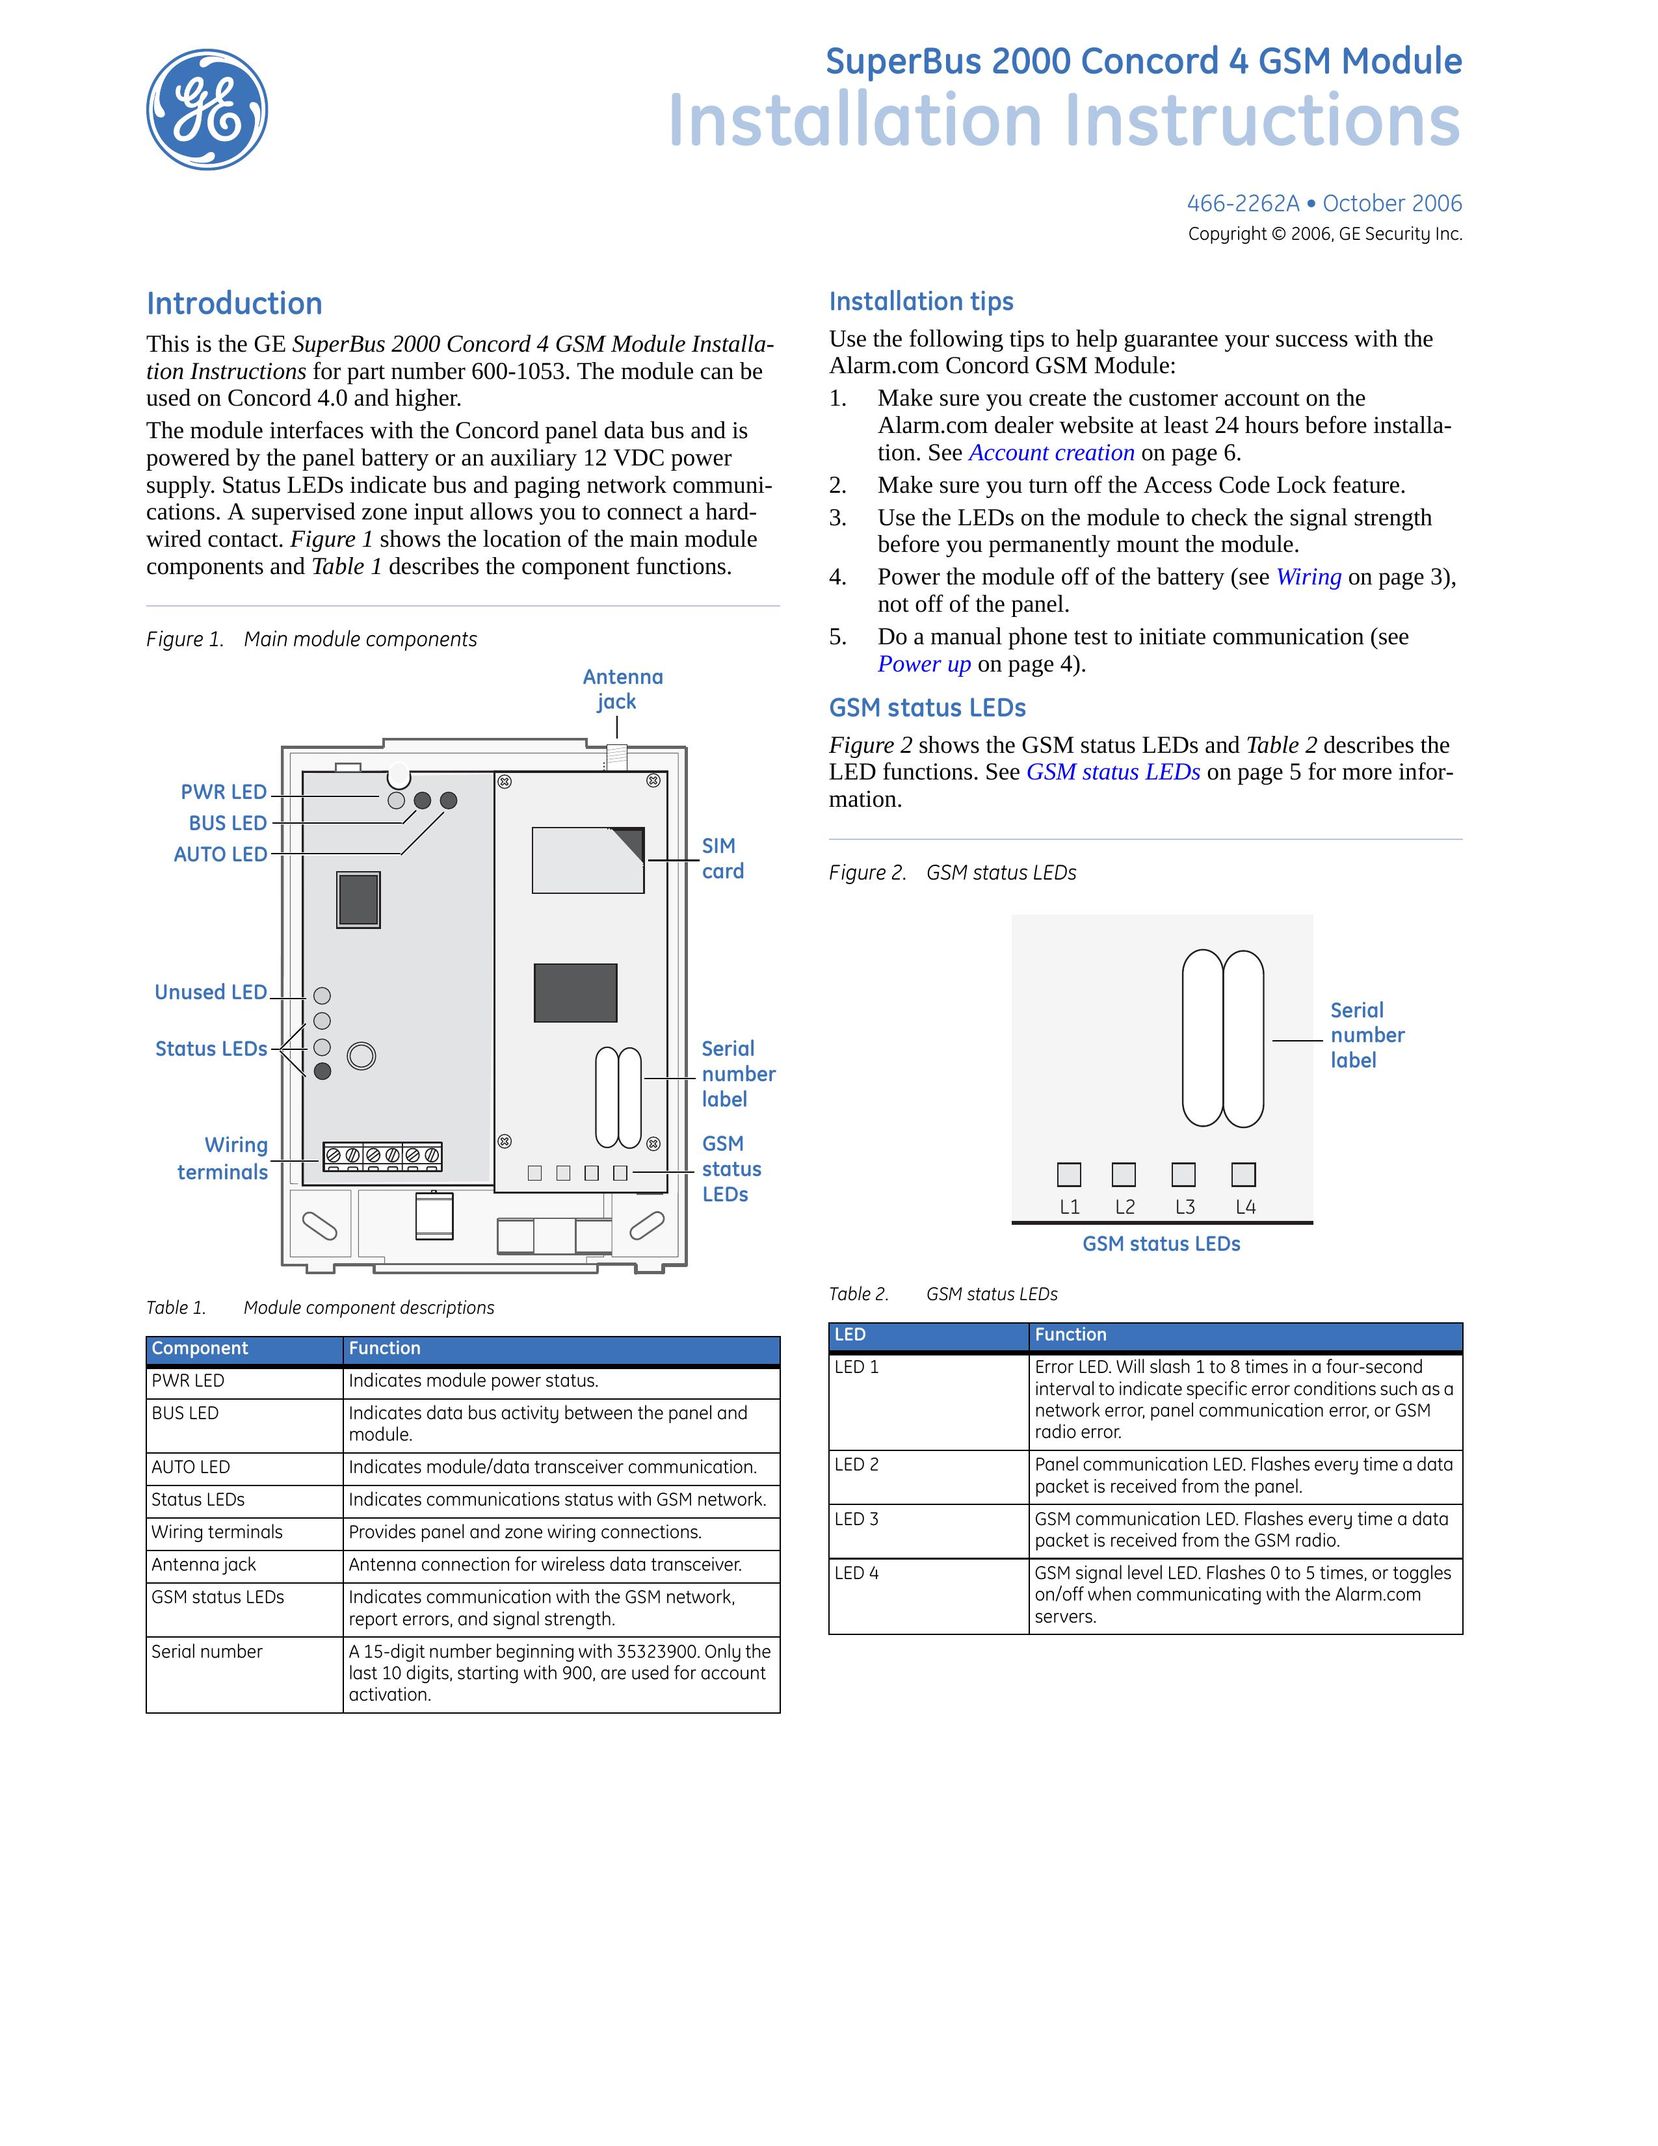 GE superbus 2000 concord 4 gsm module Network Card User Manual